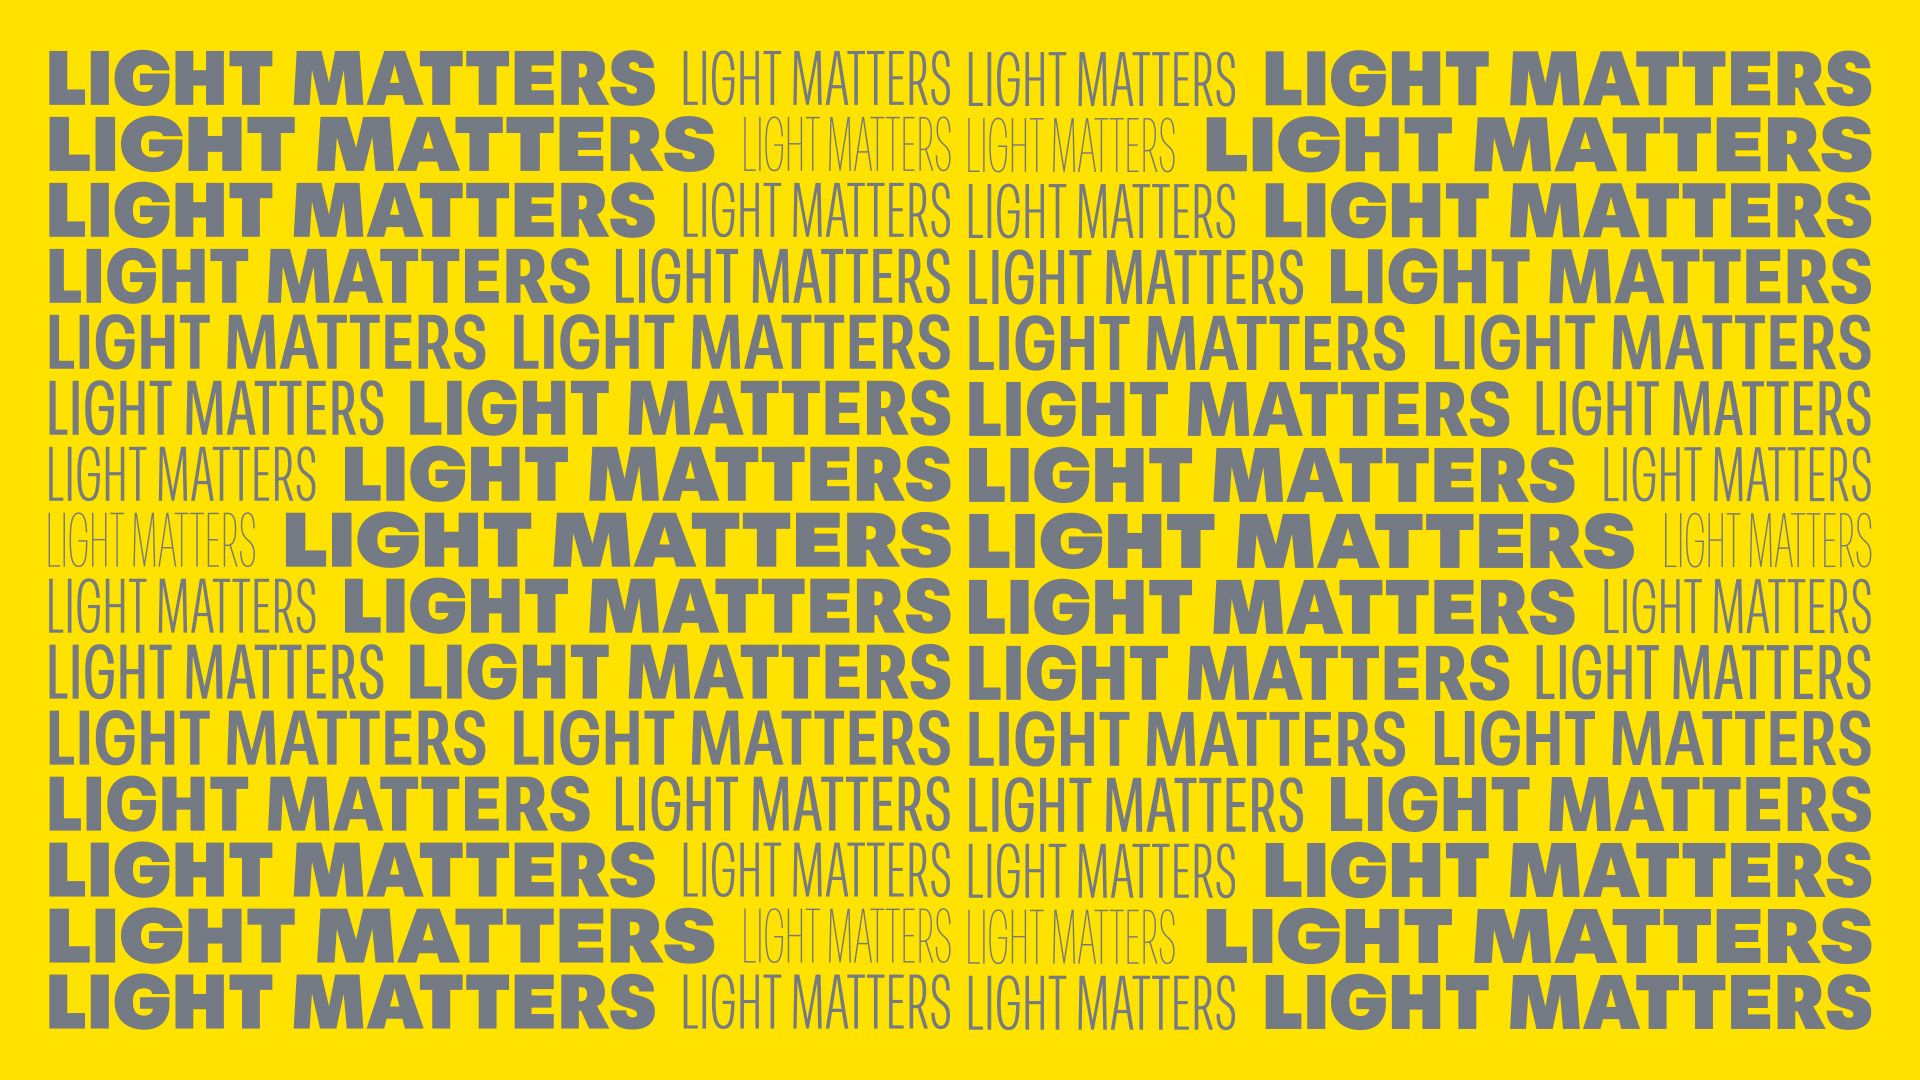 Light is Matter: Cappelli Identity Design Signs the New Brand Identity of Nobile Italia